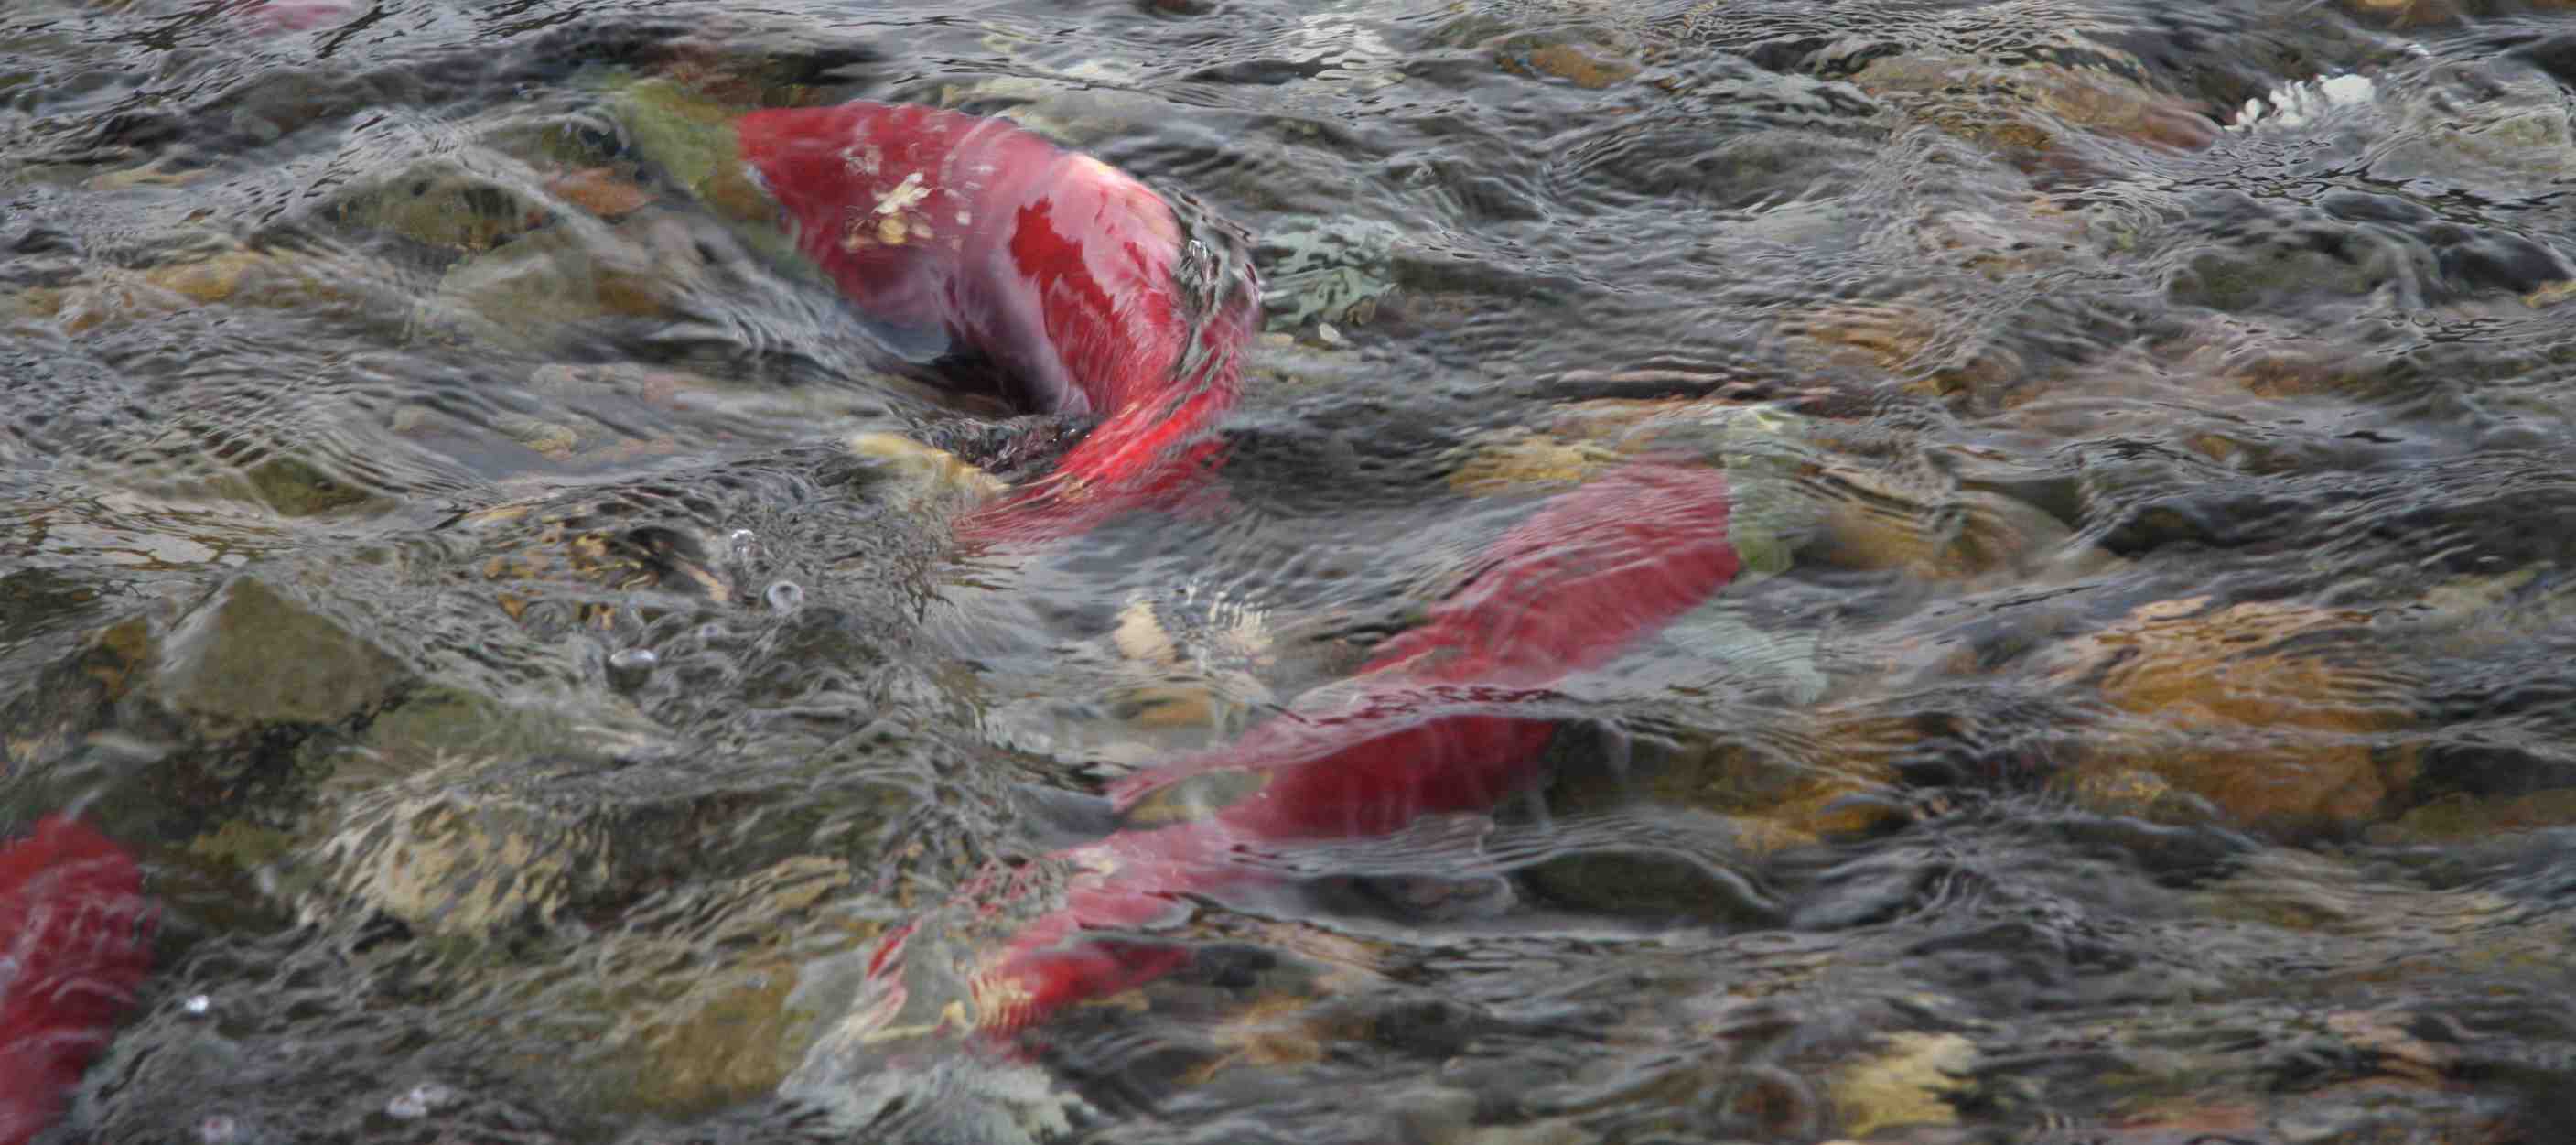 papel tapiz de salmón,koi,salmón rojo,salmón,pez